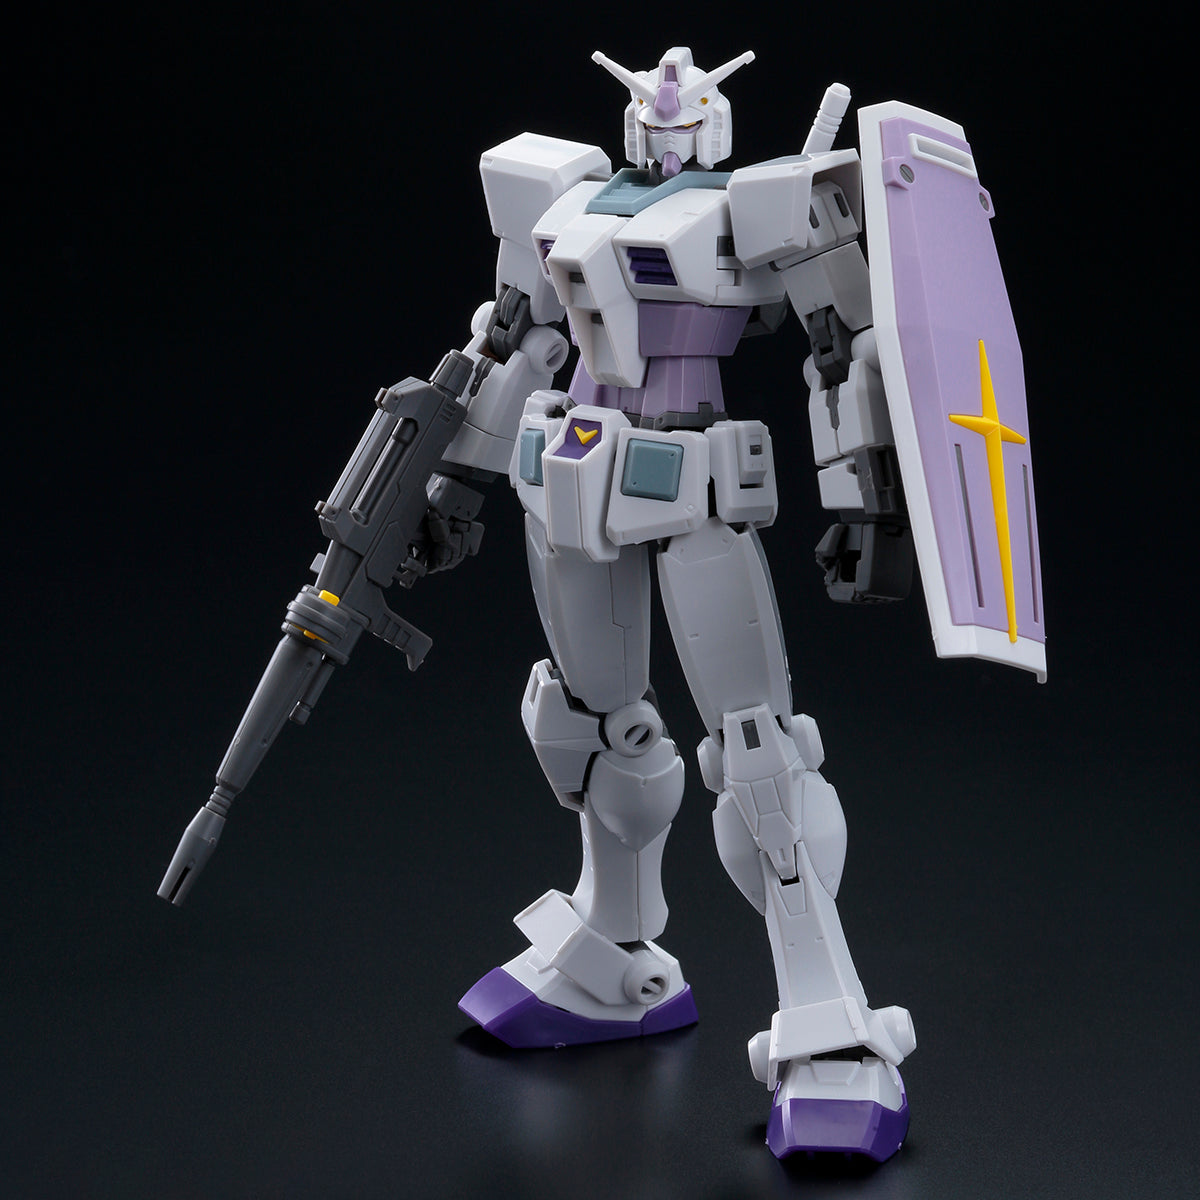 PREVENTA HG 1/144 RX-78-3 "G-3" [Beyond Global] Gundam